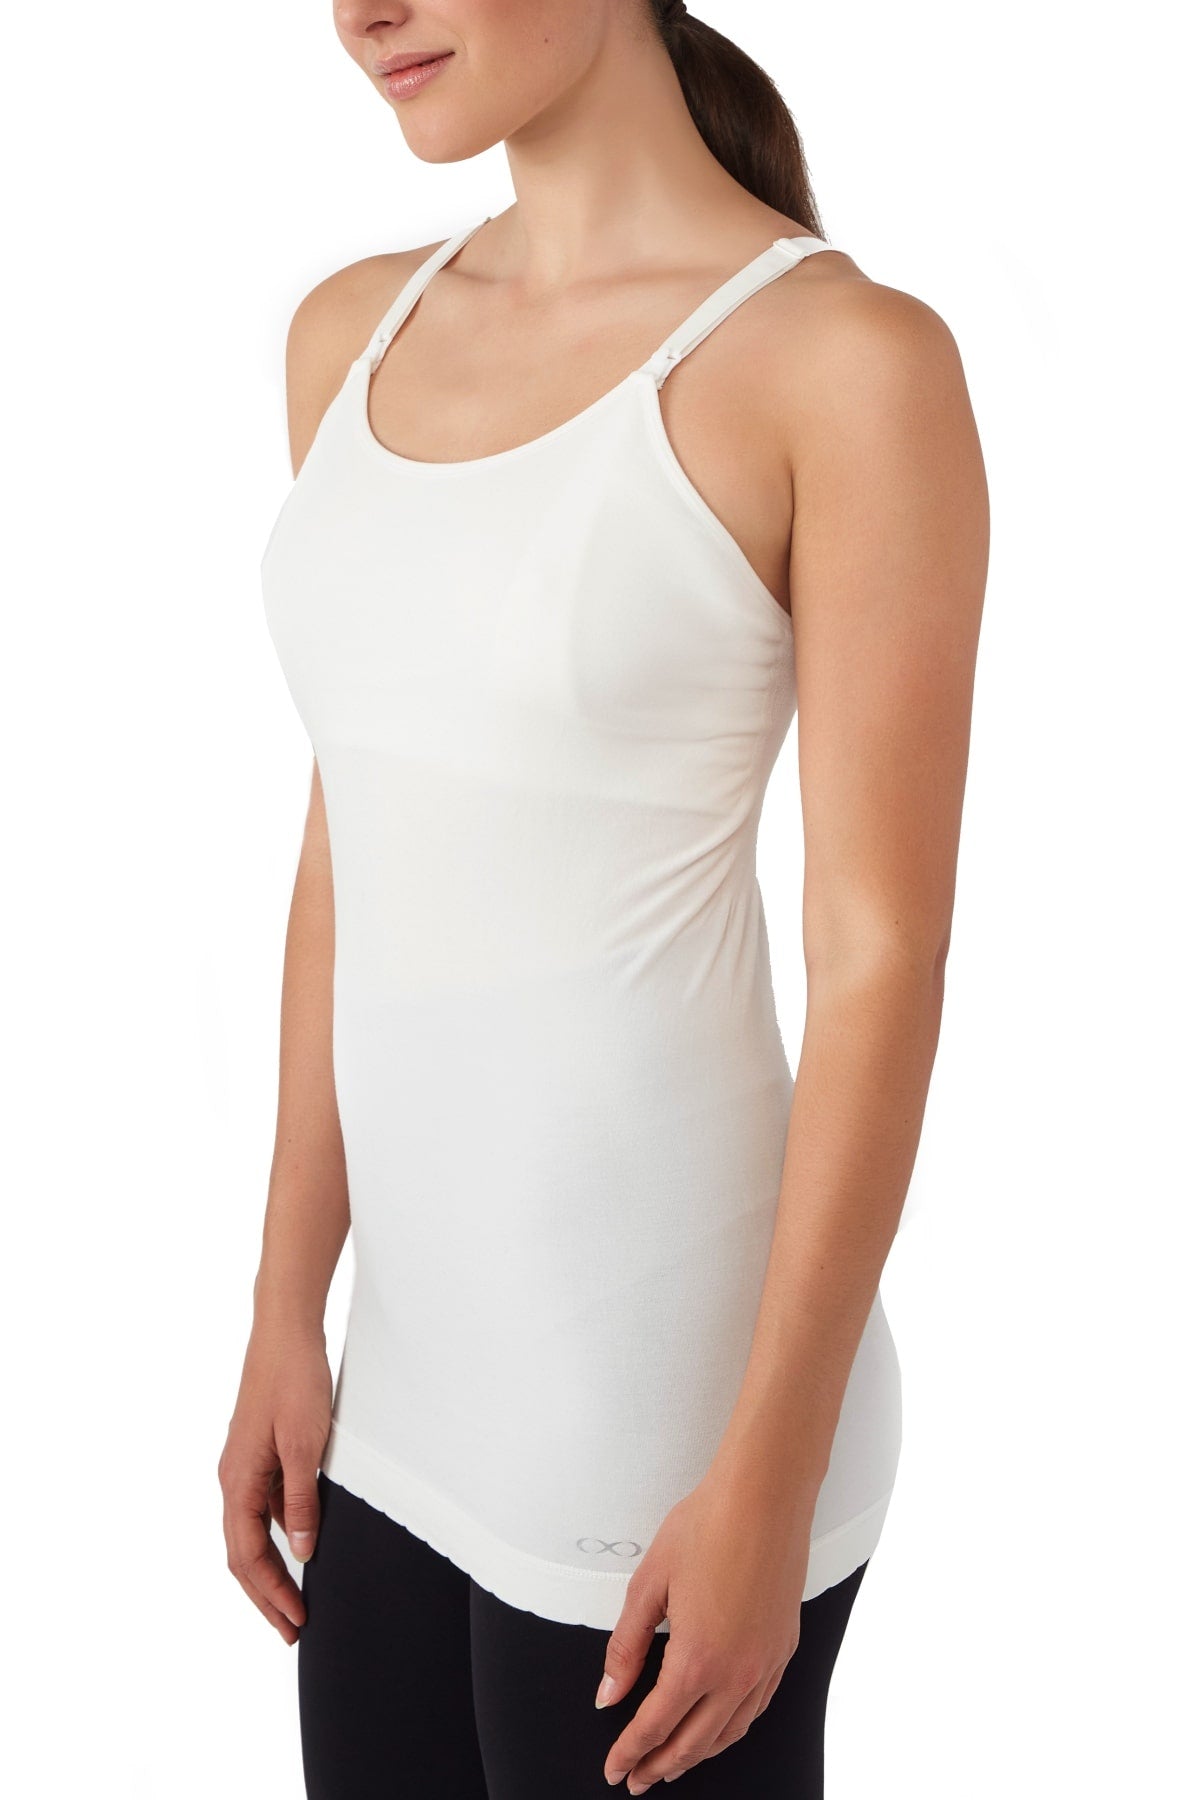 LOVE Scope Nurse Women's Fashion Sleeveless Muscle Workout Yoga Tank Top  Charcoal Grey Medium